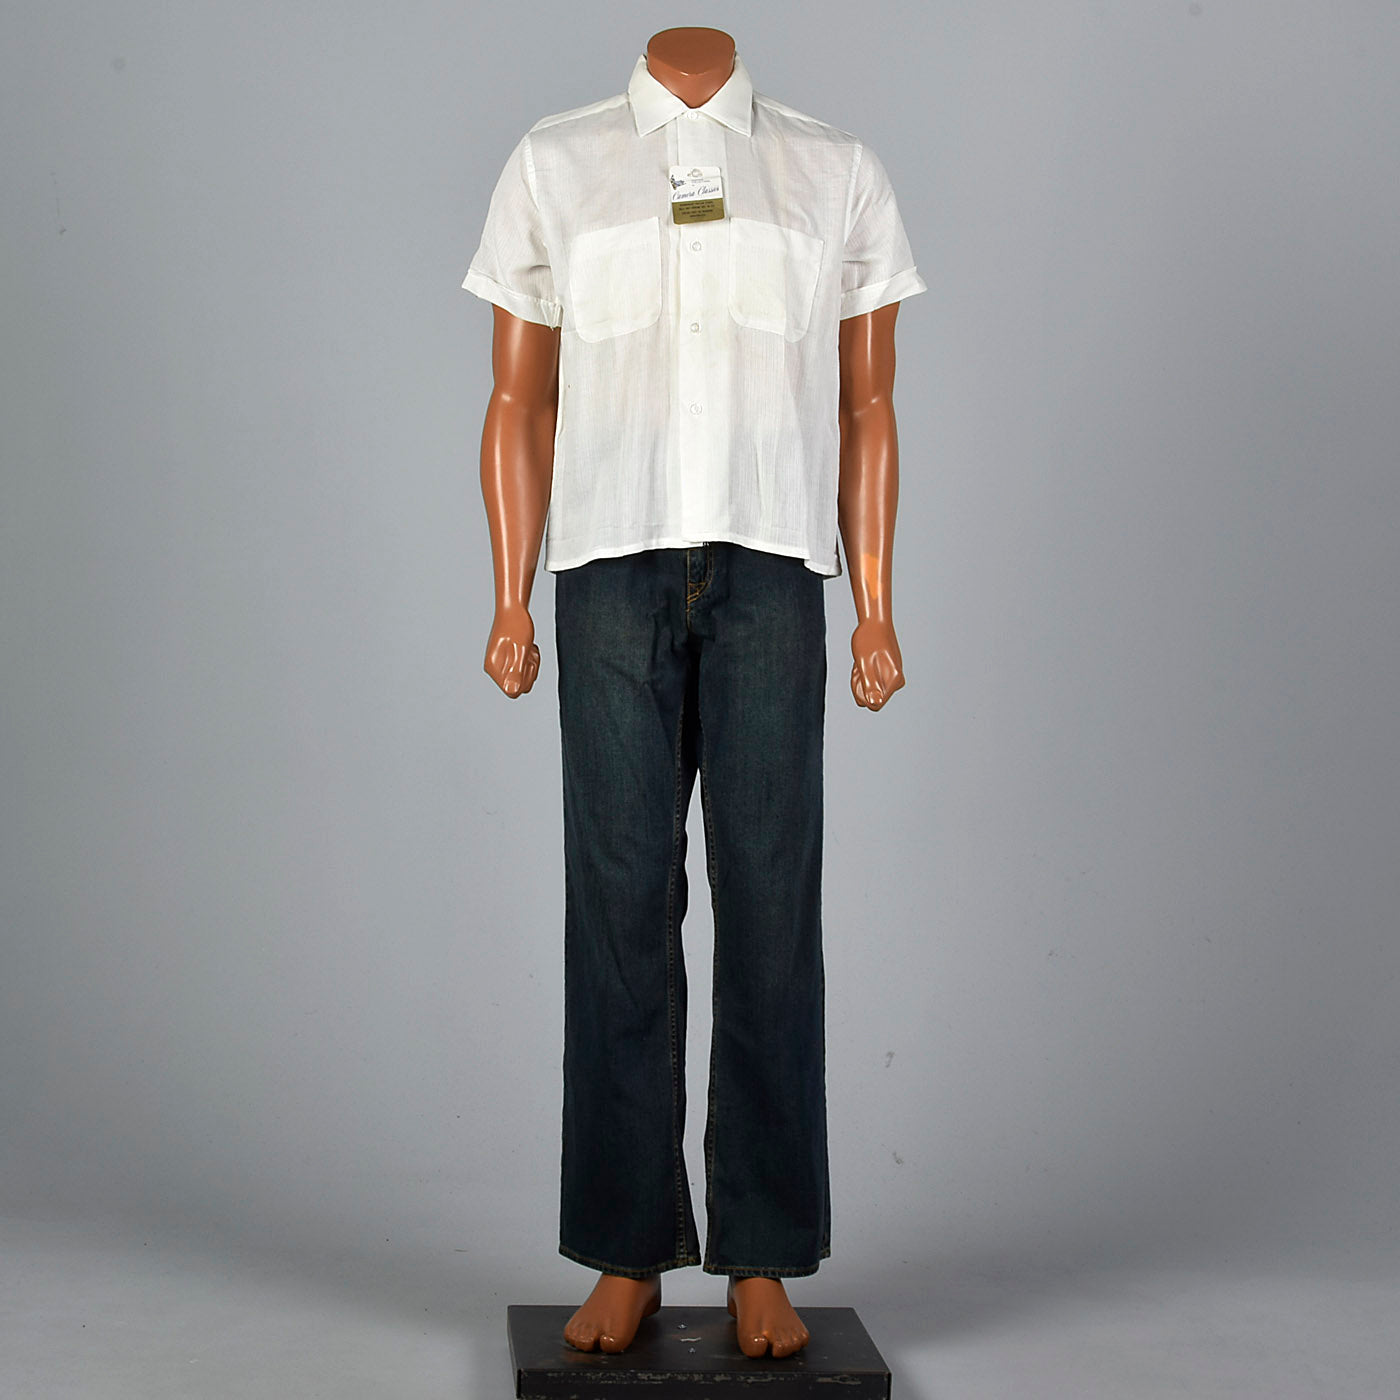 1950s Deadstock White Sanforized Cotton Shirt